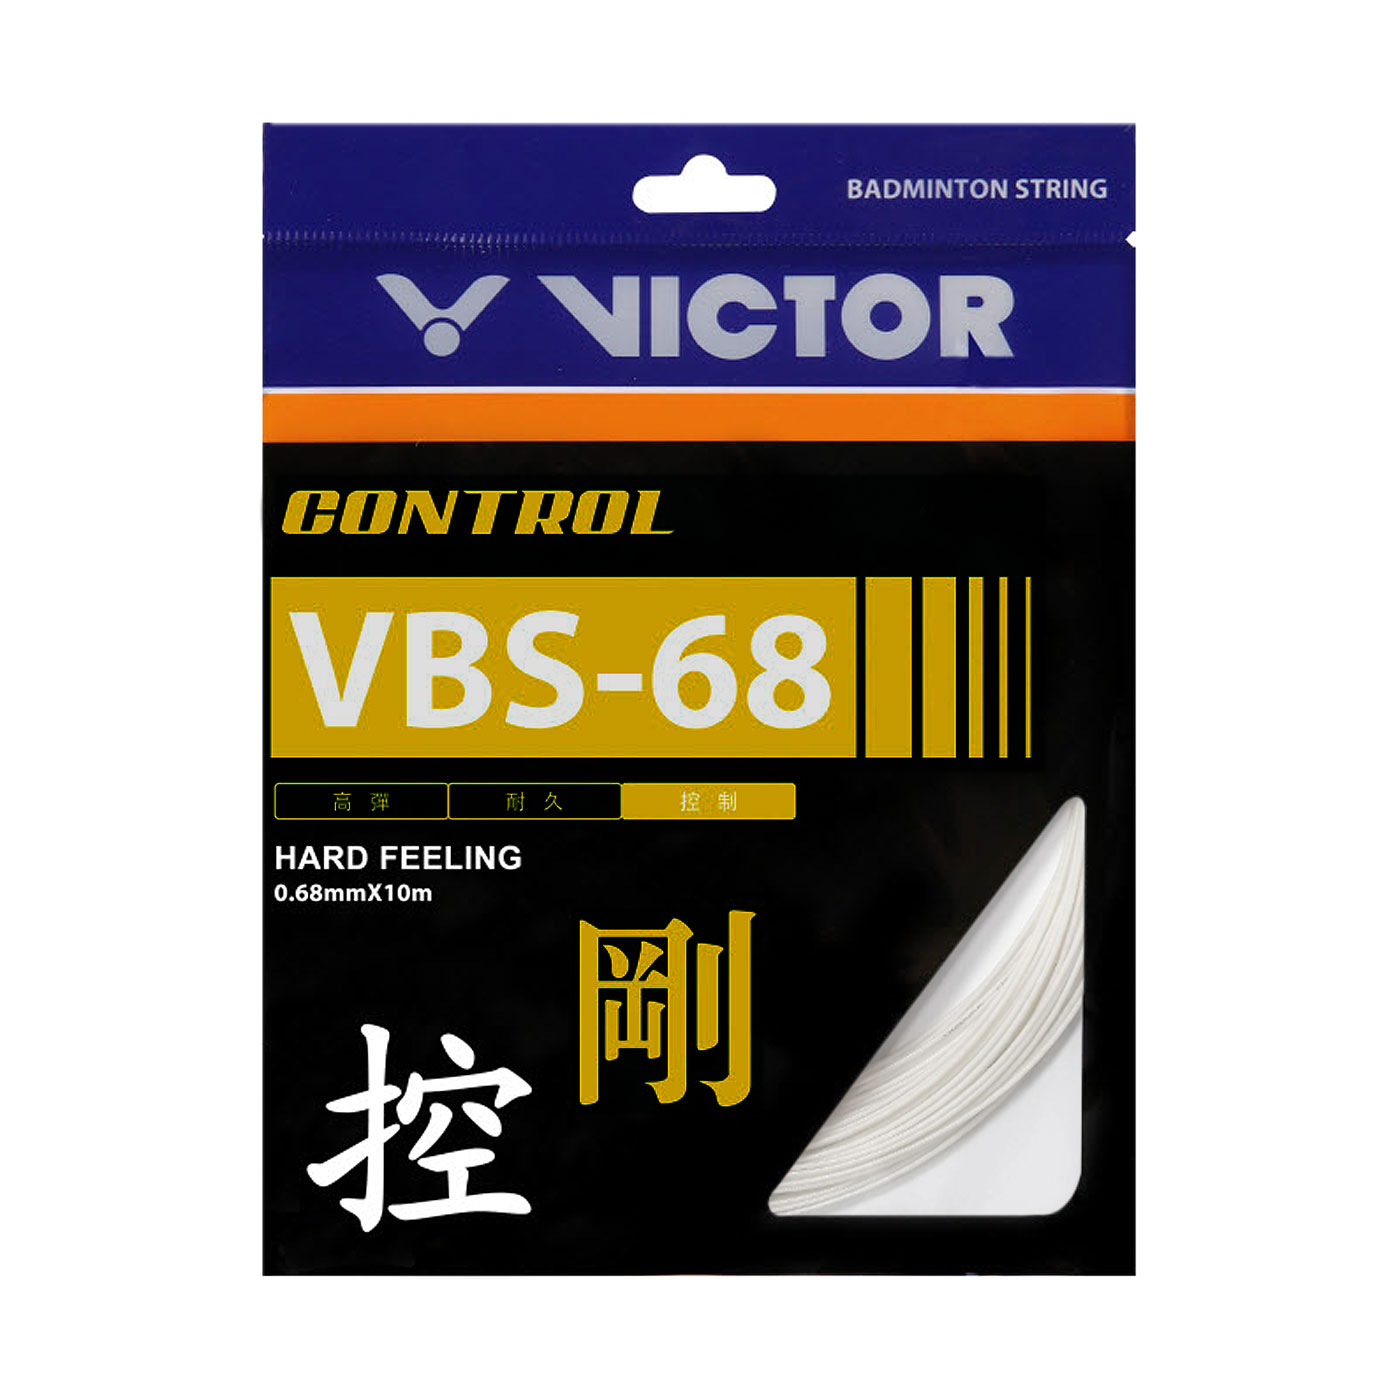 VICTOR 控制羽拍線-剛(盒) VBS-68-A-10 SETS - 白